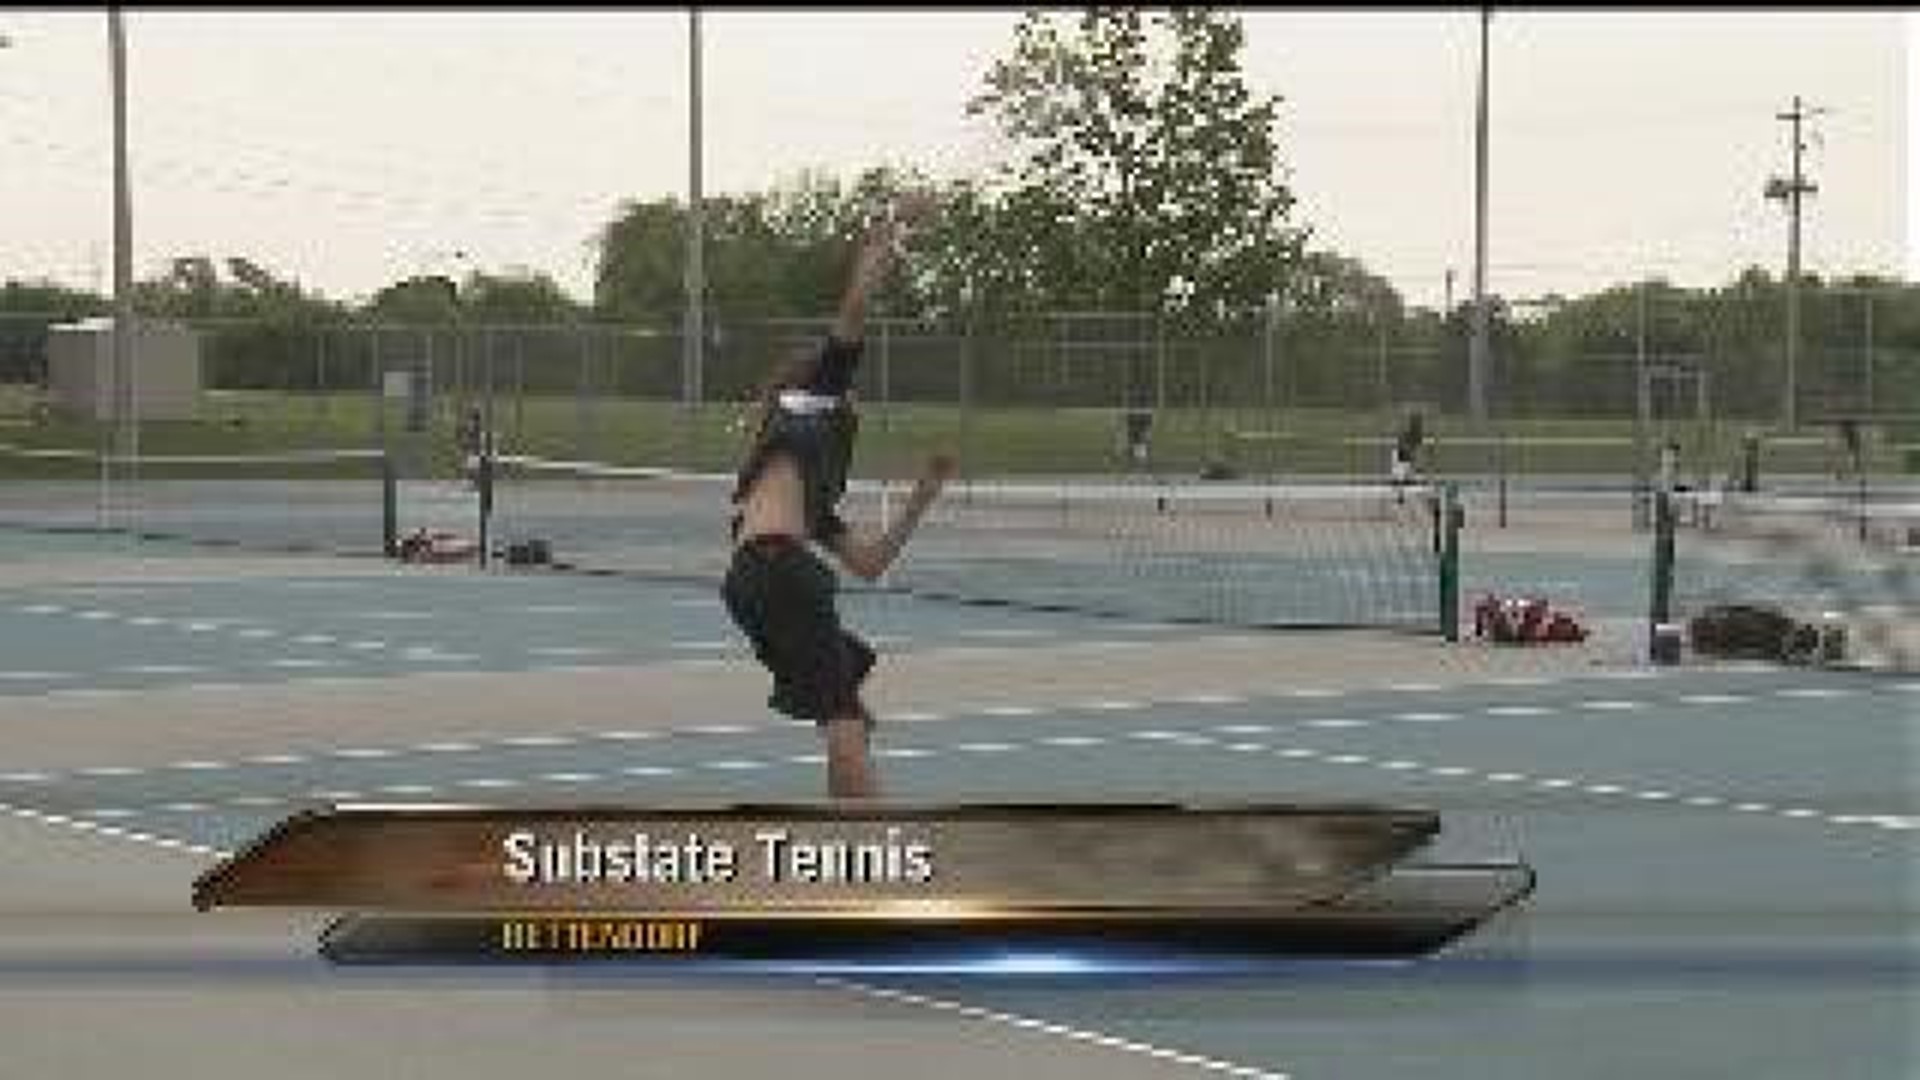 Substate Tennis